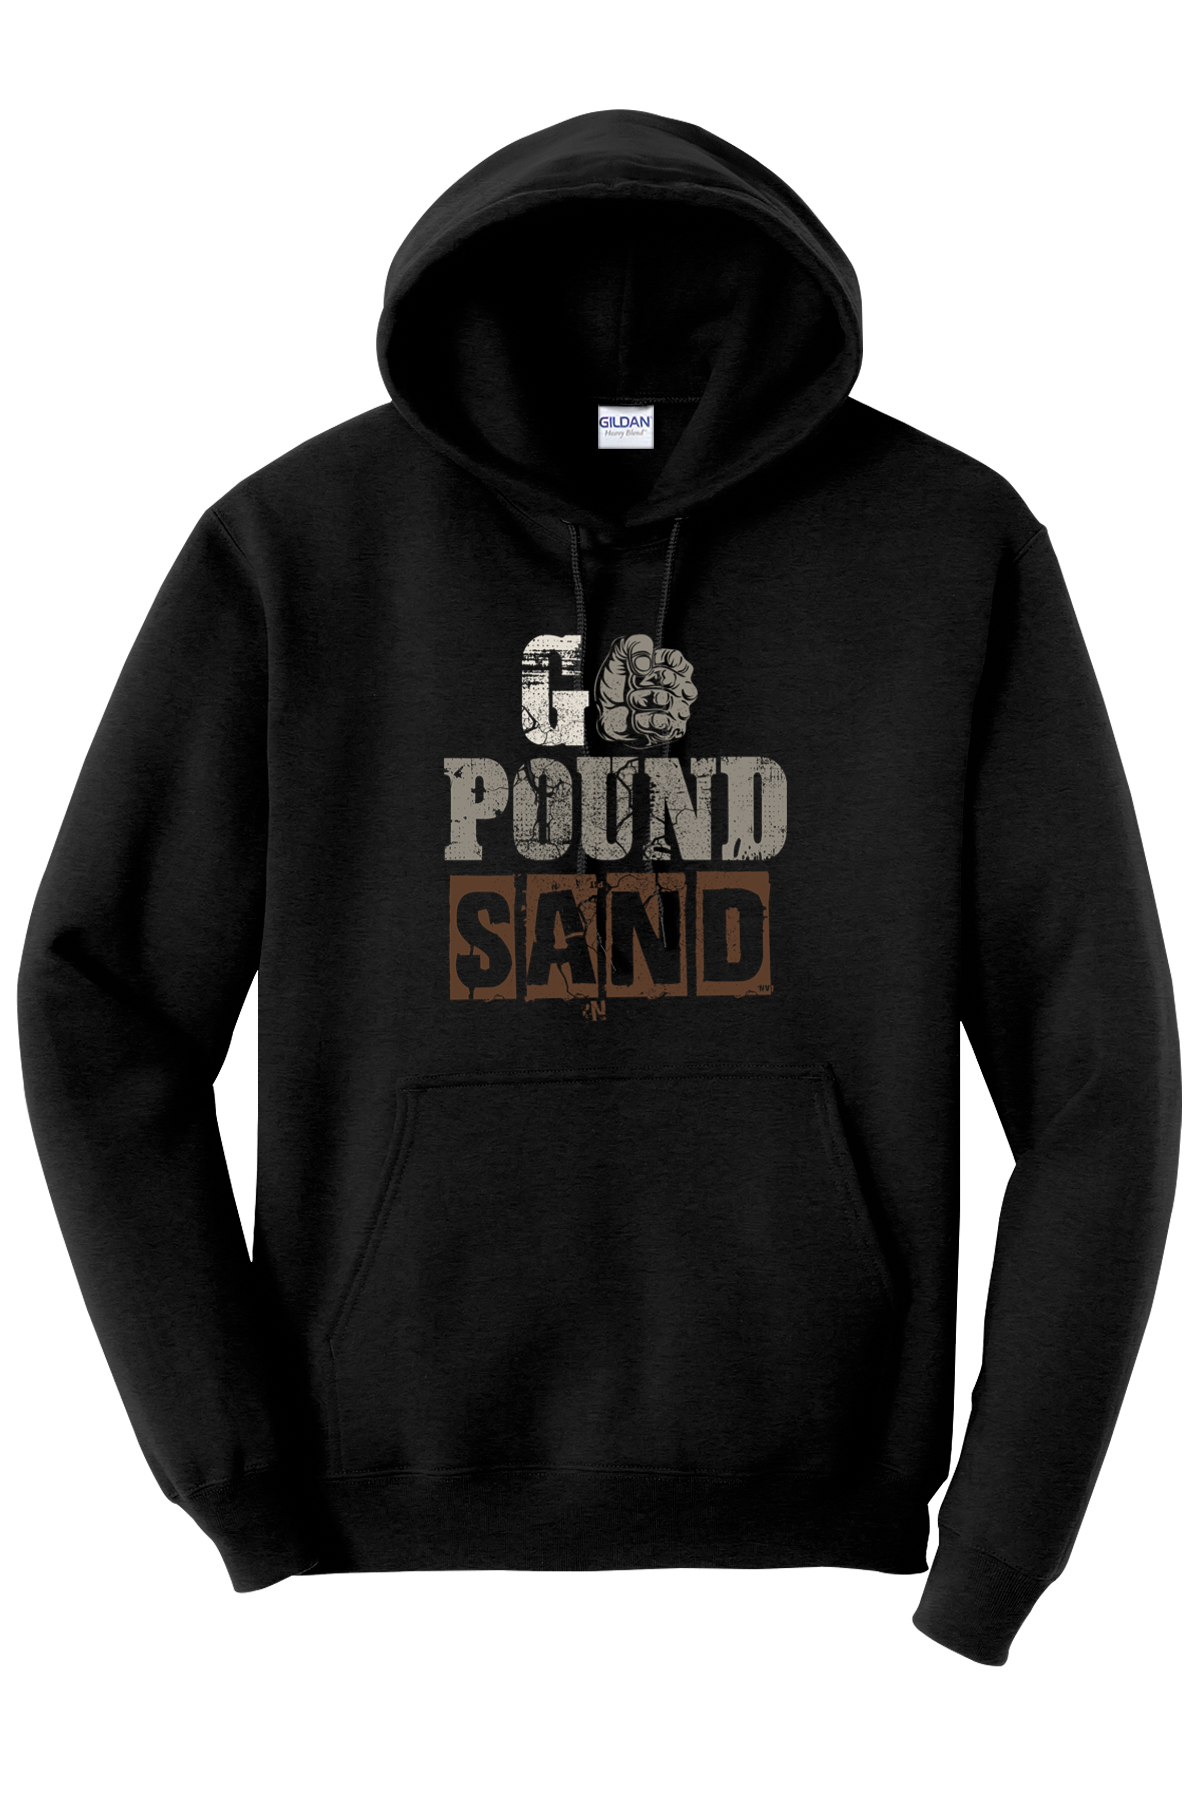 OG3 Go Pound Sand Hoodie